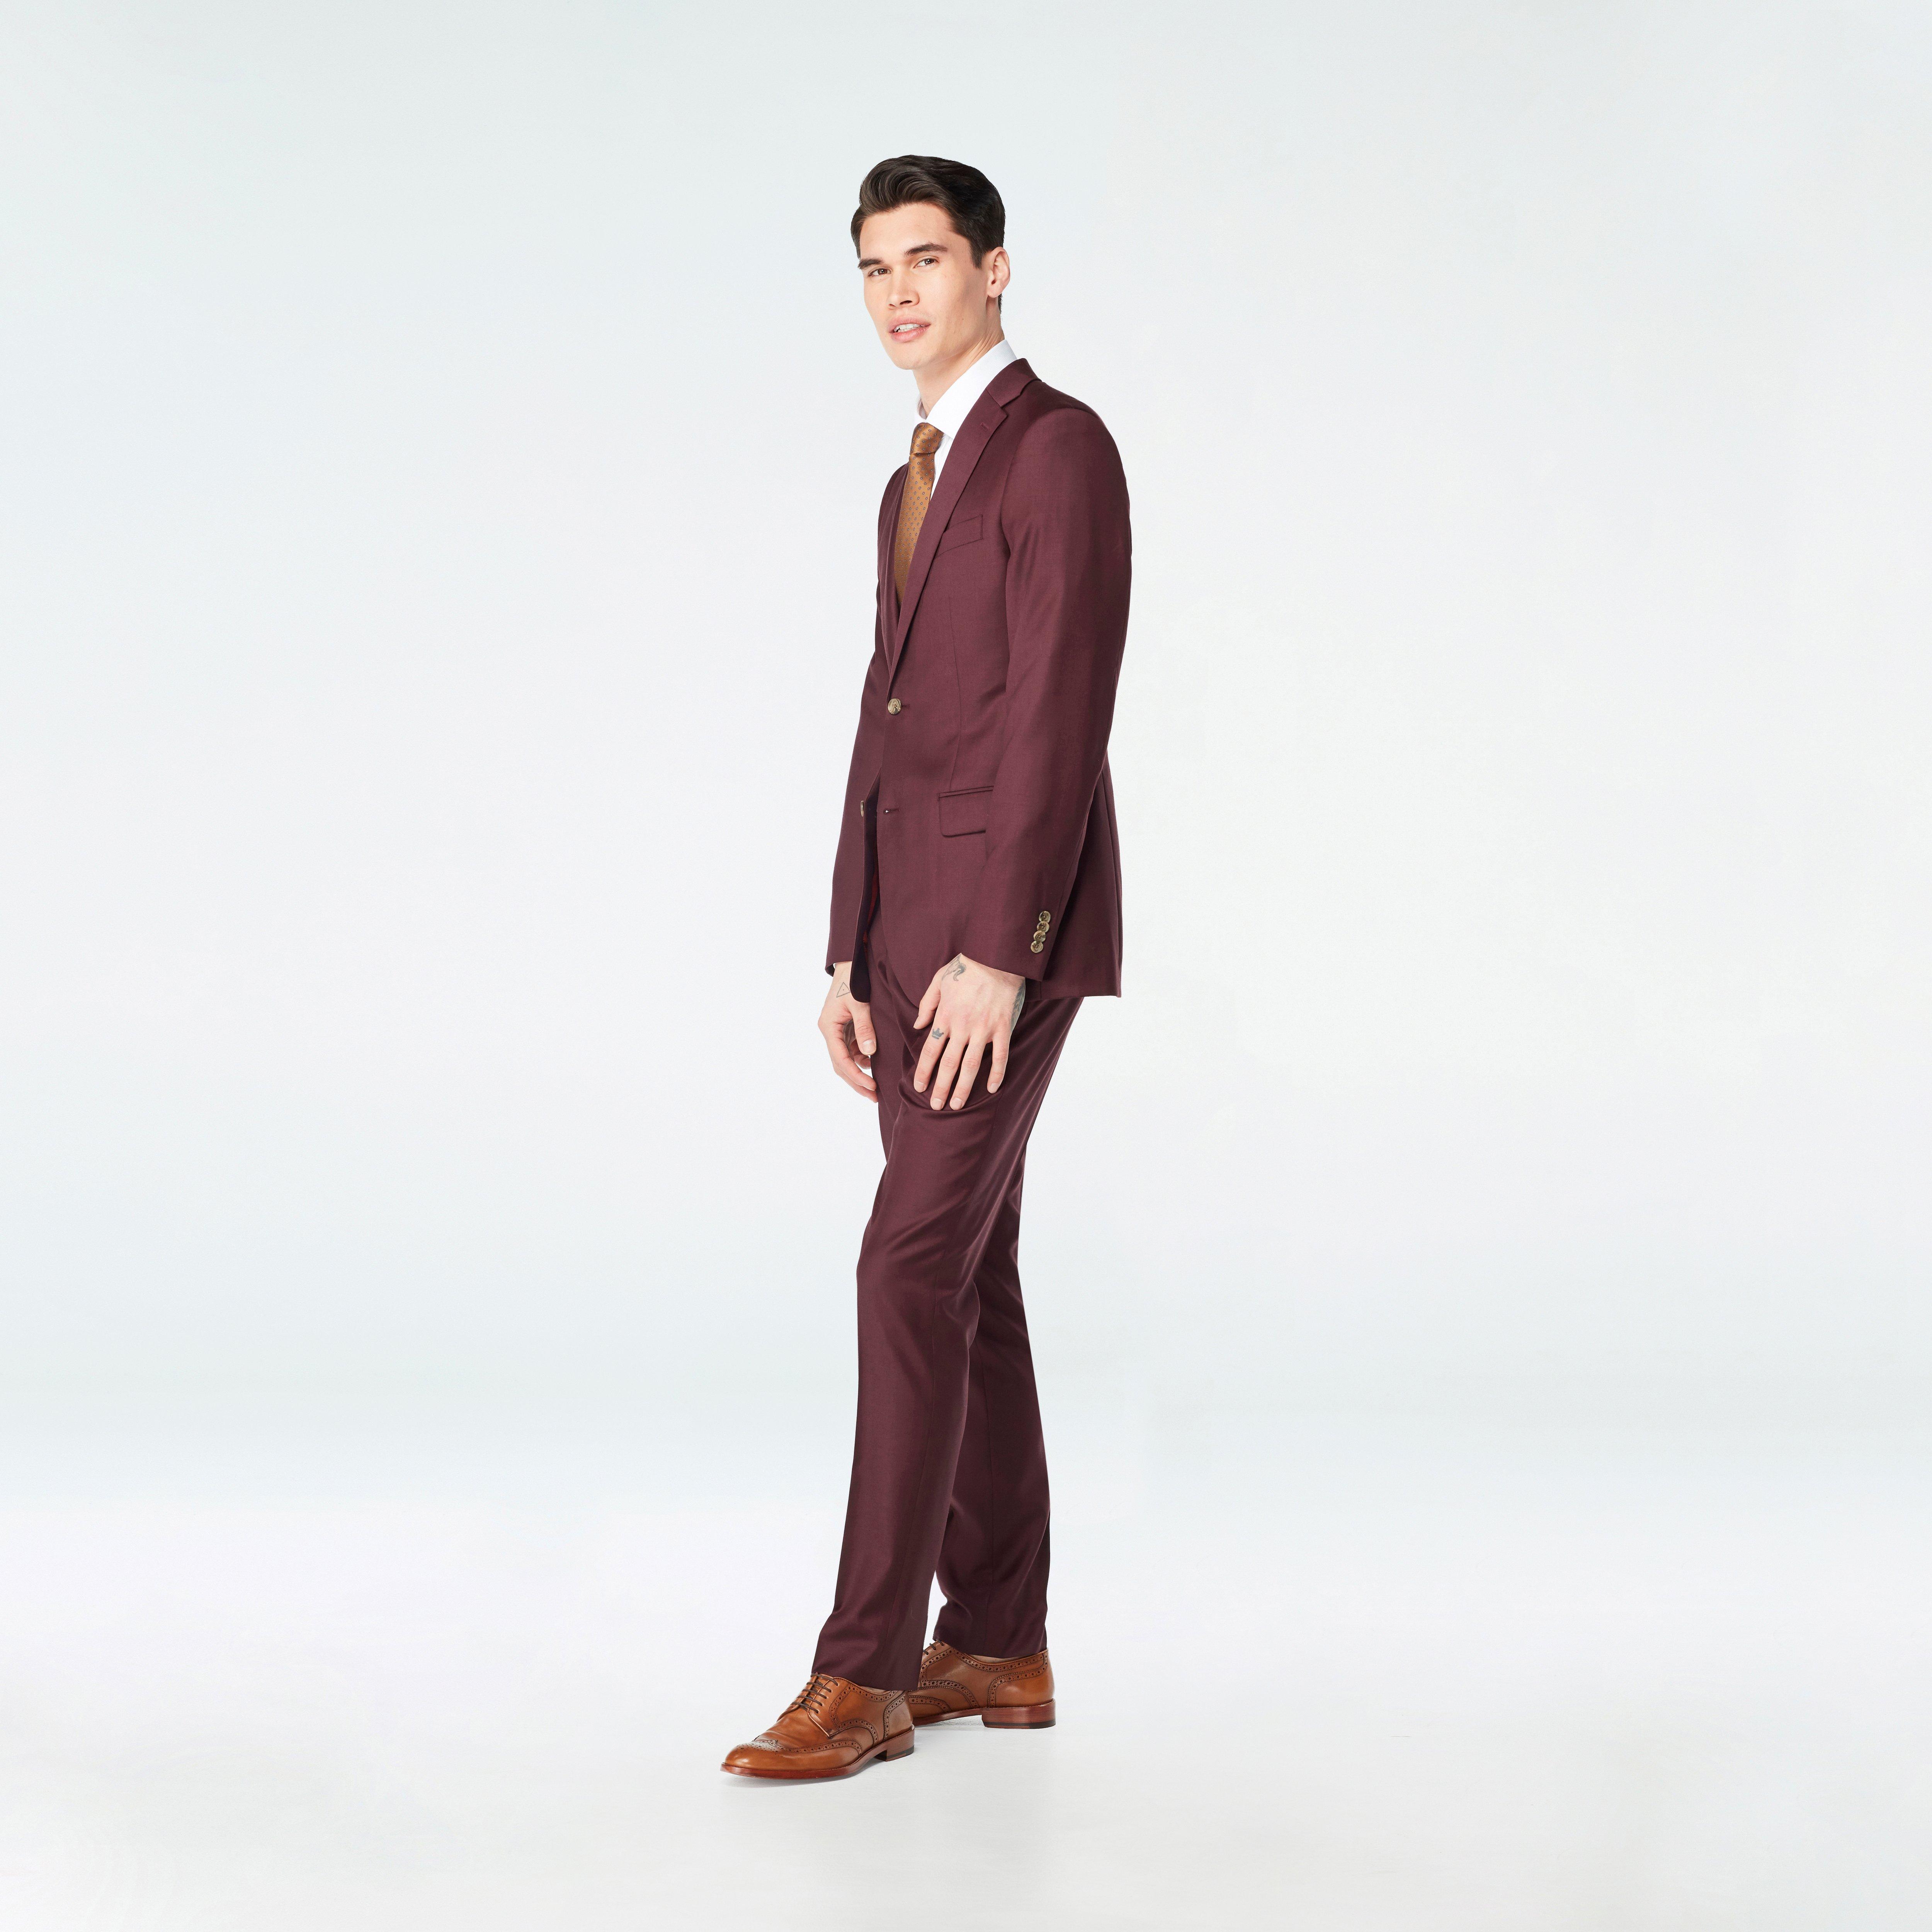 Discover more than 203 maroon colour suit men